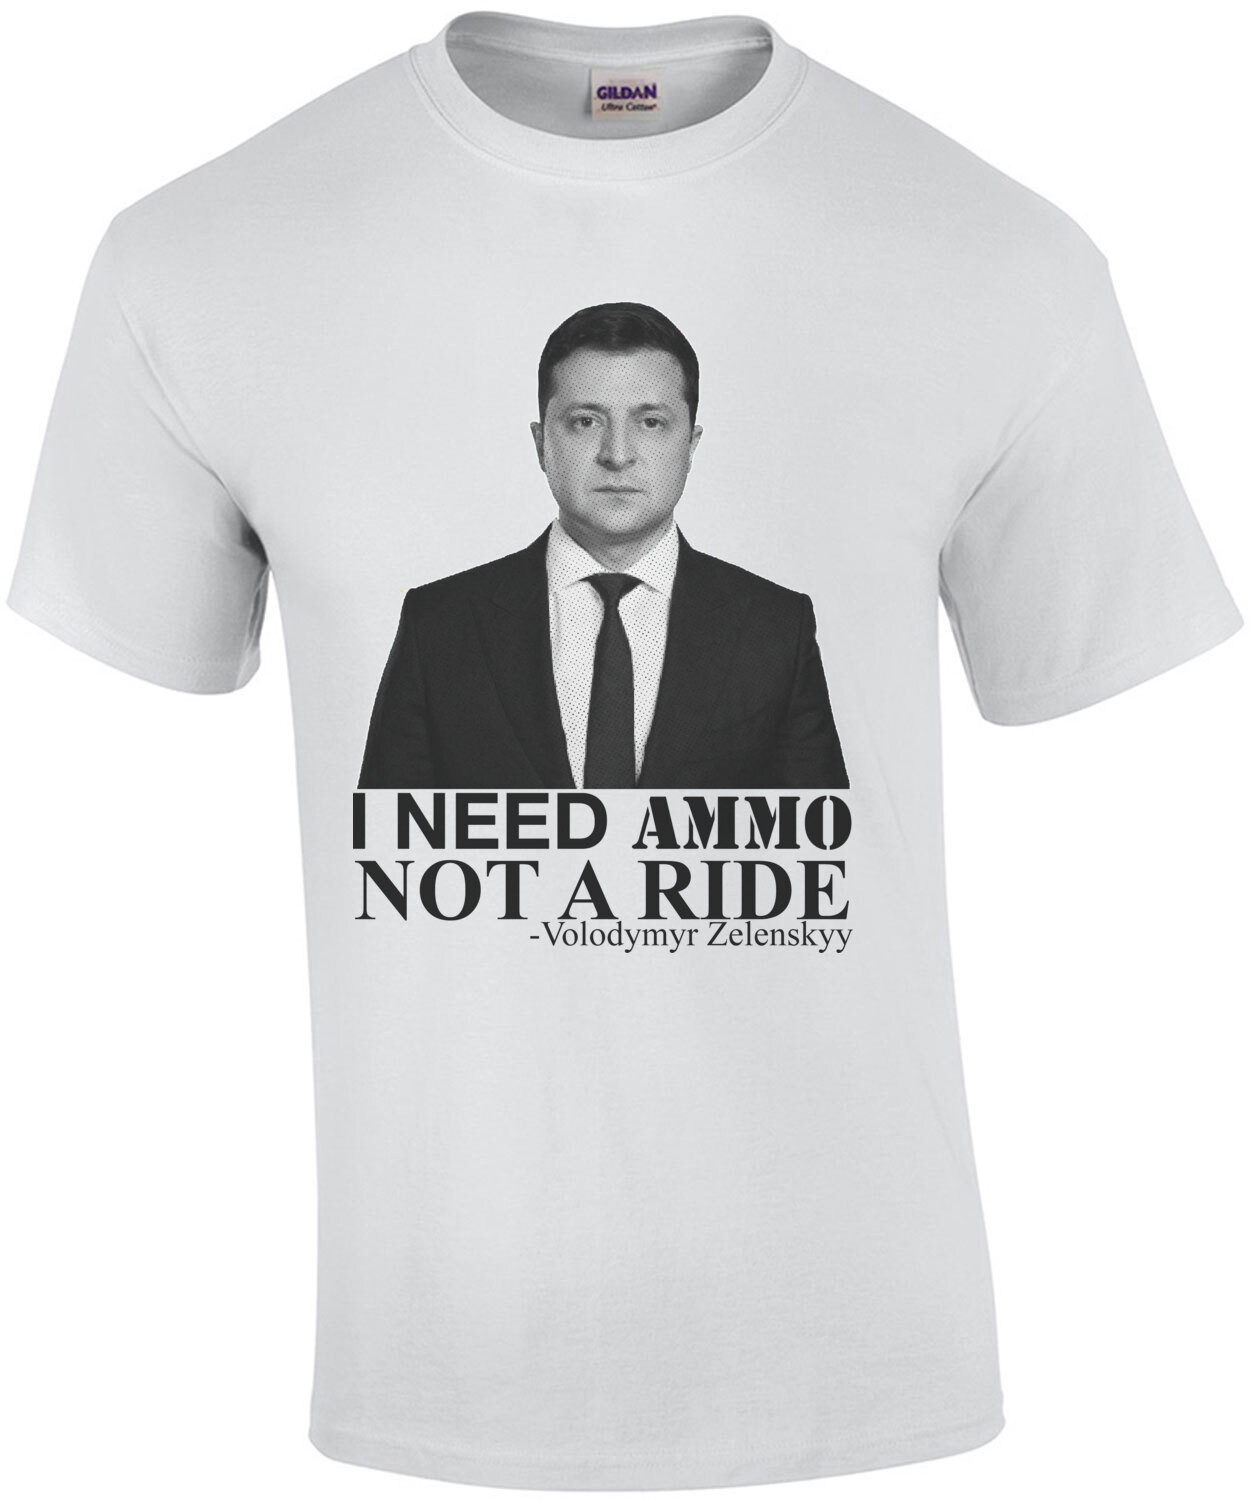 I Need Ammo Not a Ride Volodymyr Zelenskyy Ukraine Shirt